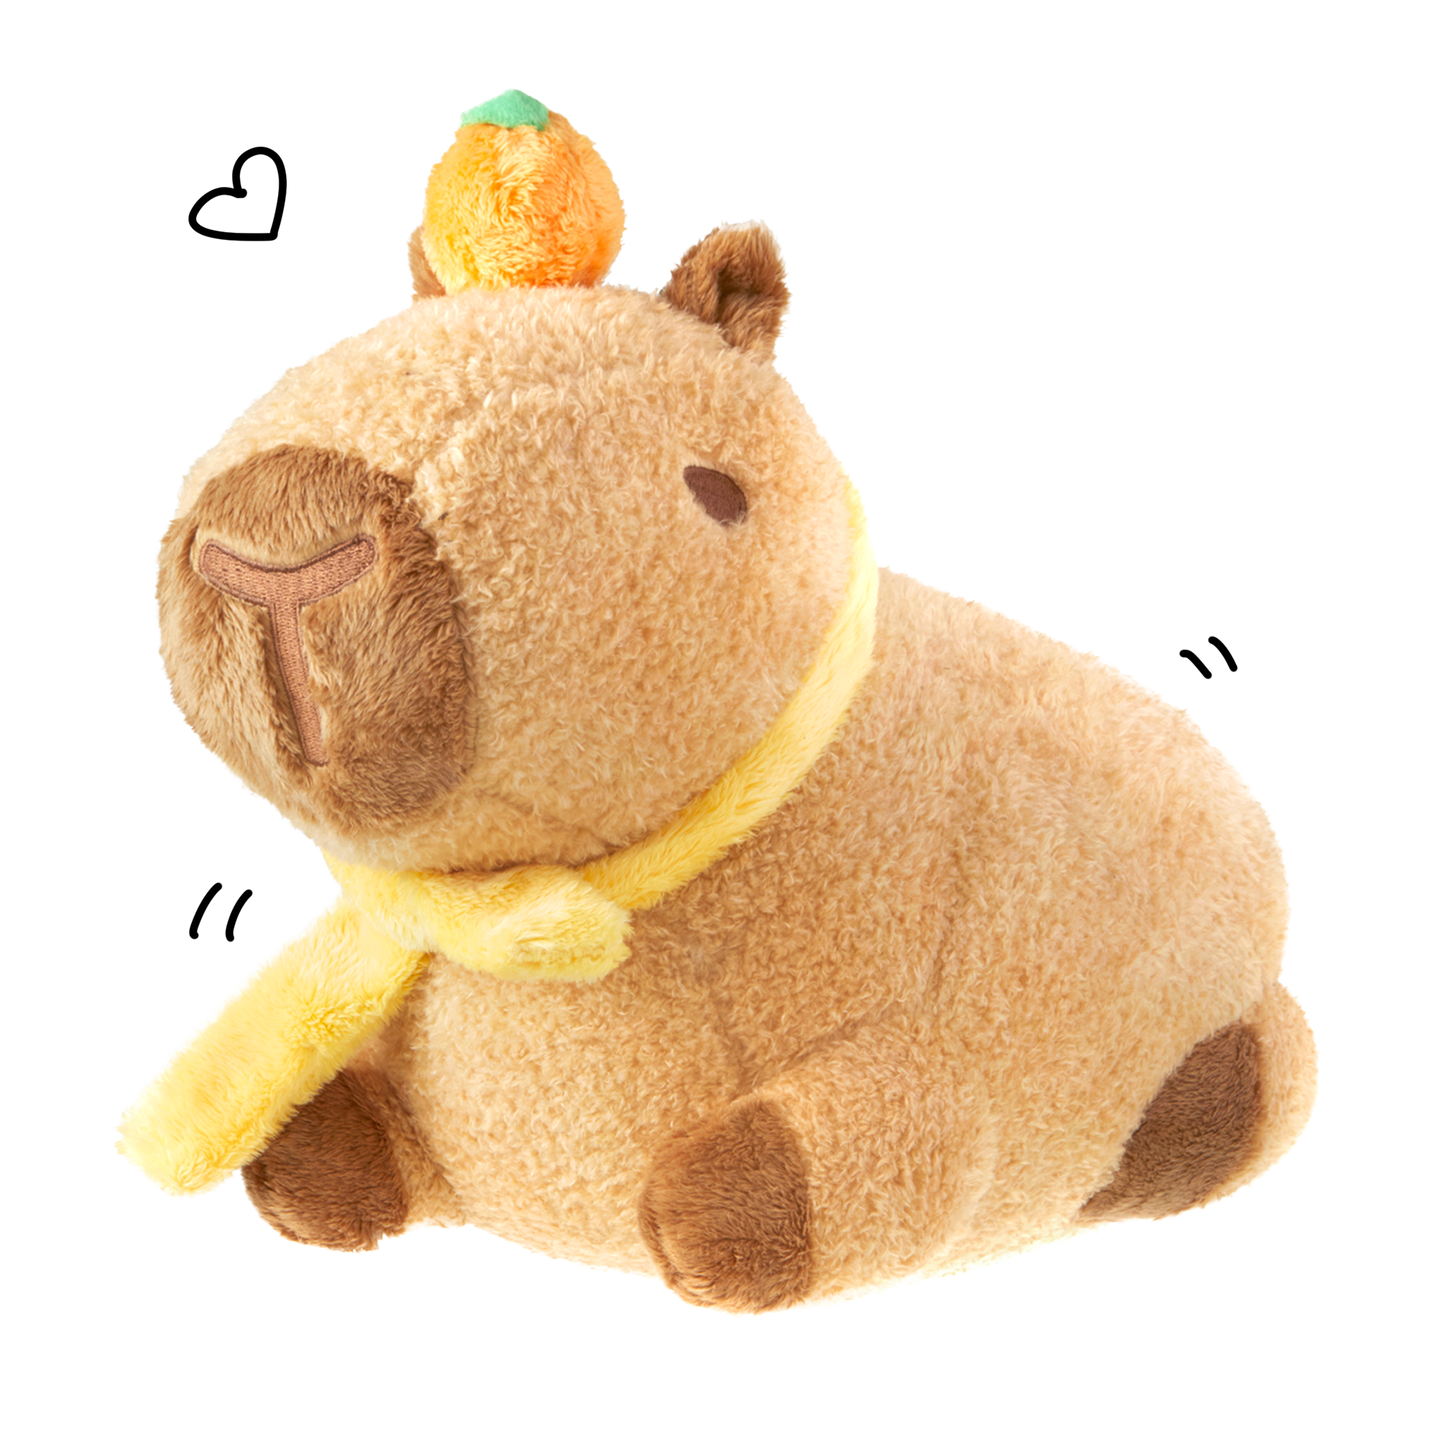 Nutmeg the Capybara